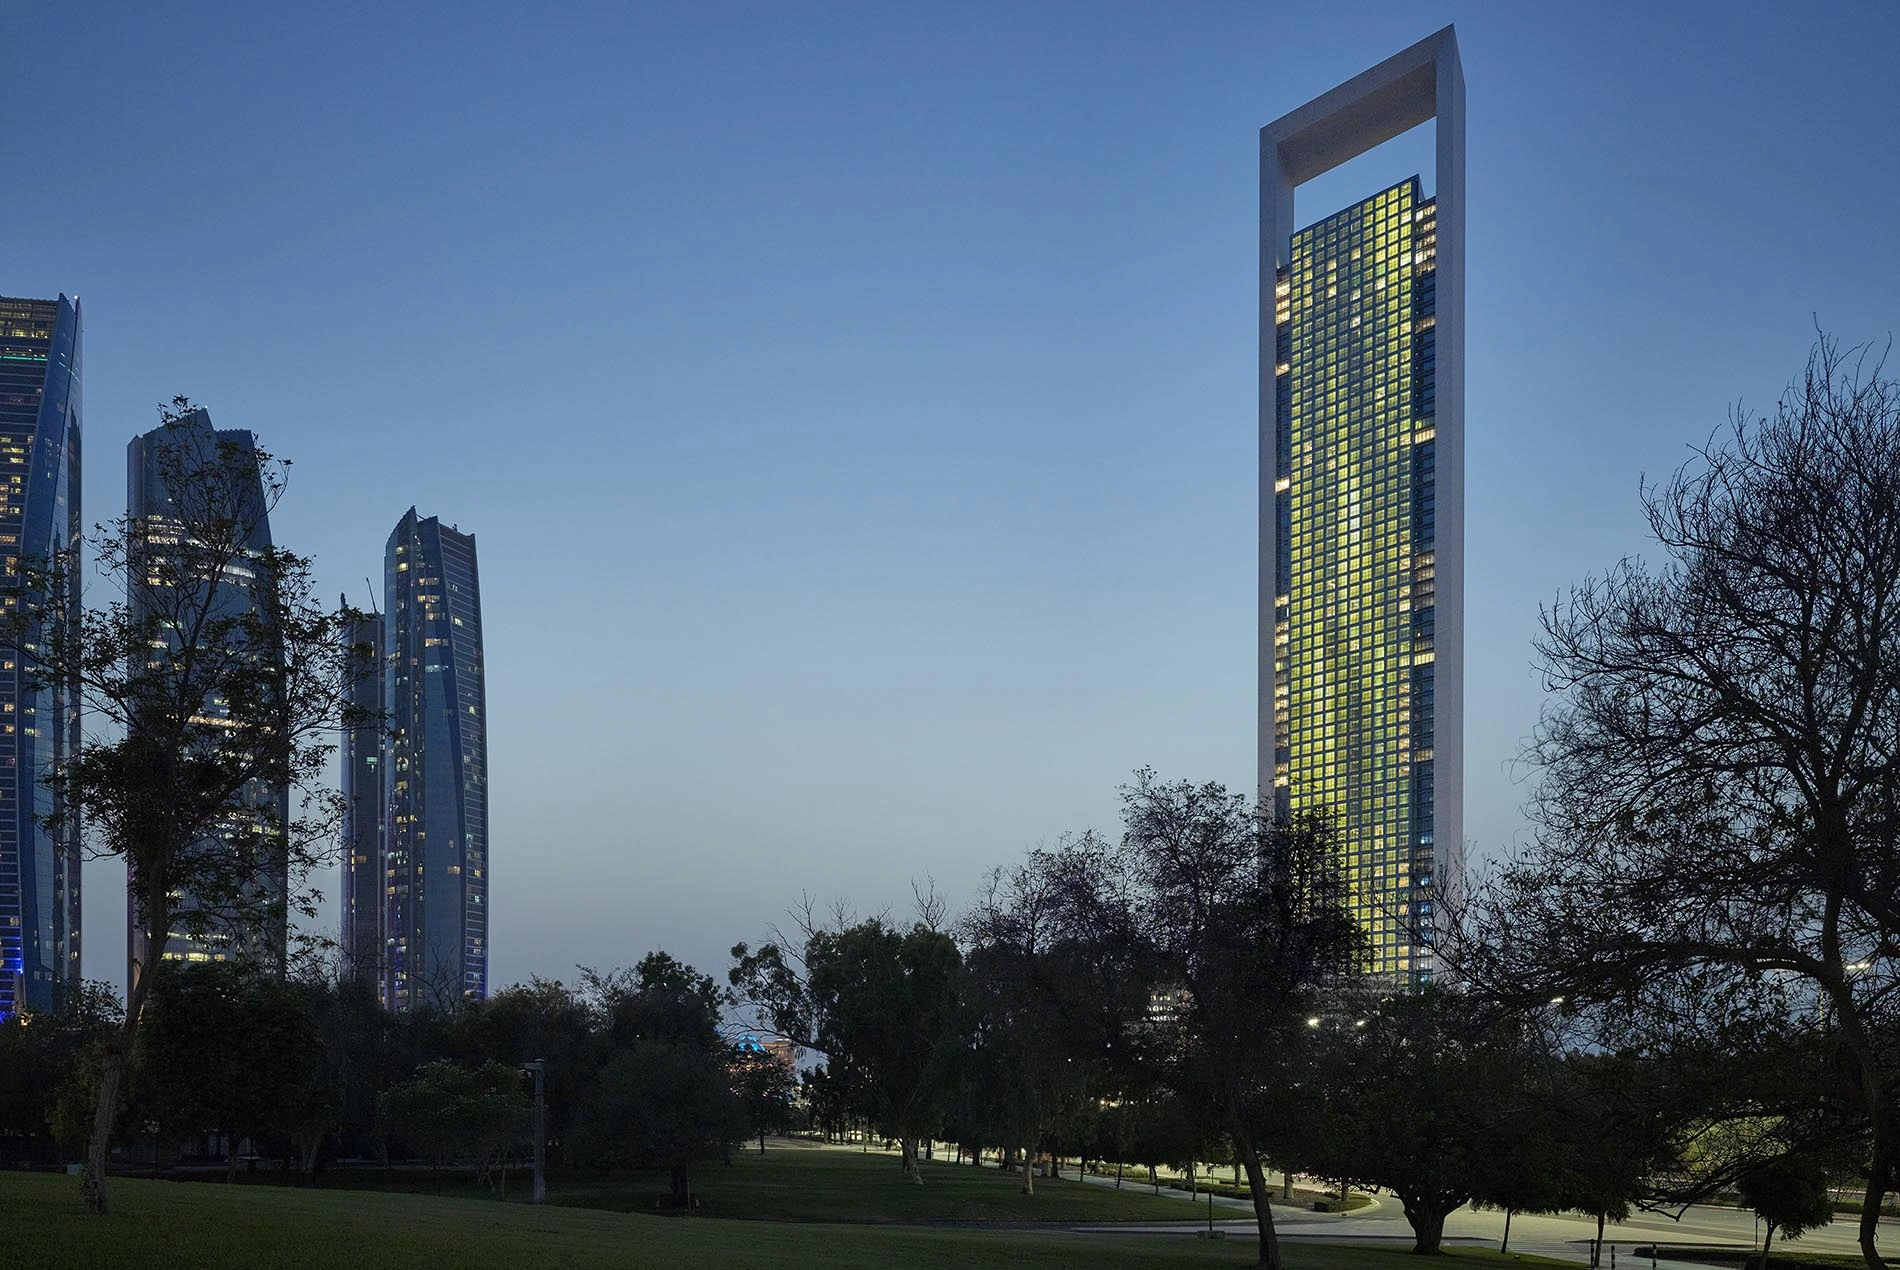 Abu Dhabi National Oil Company Headquarters.